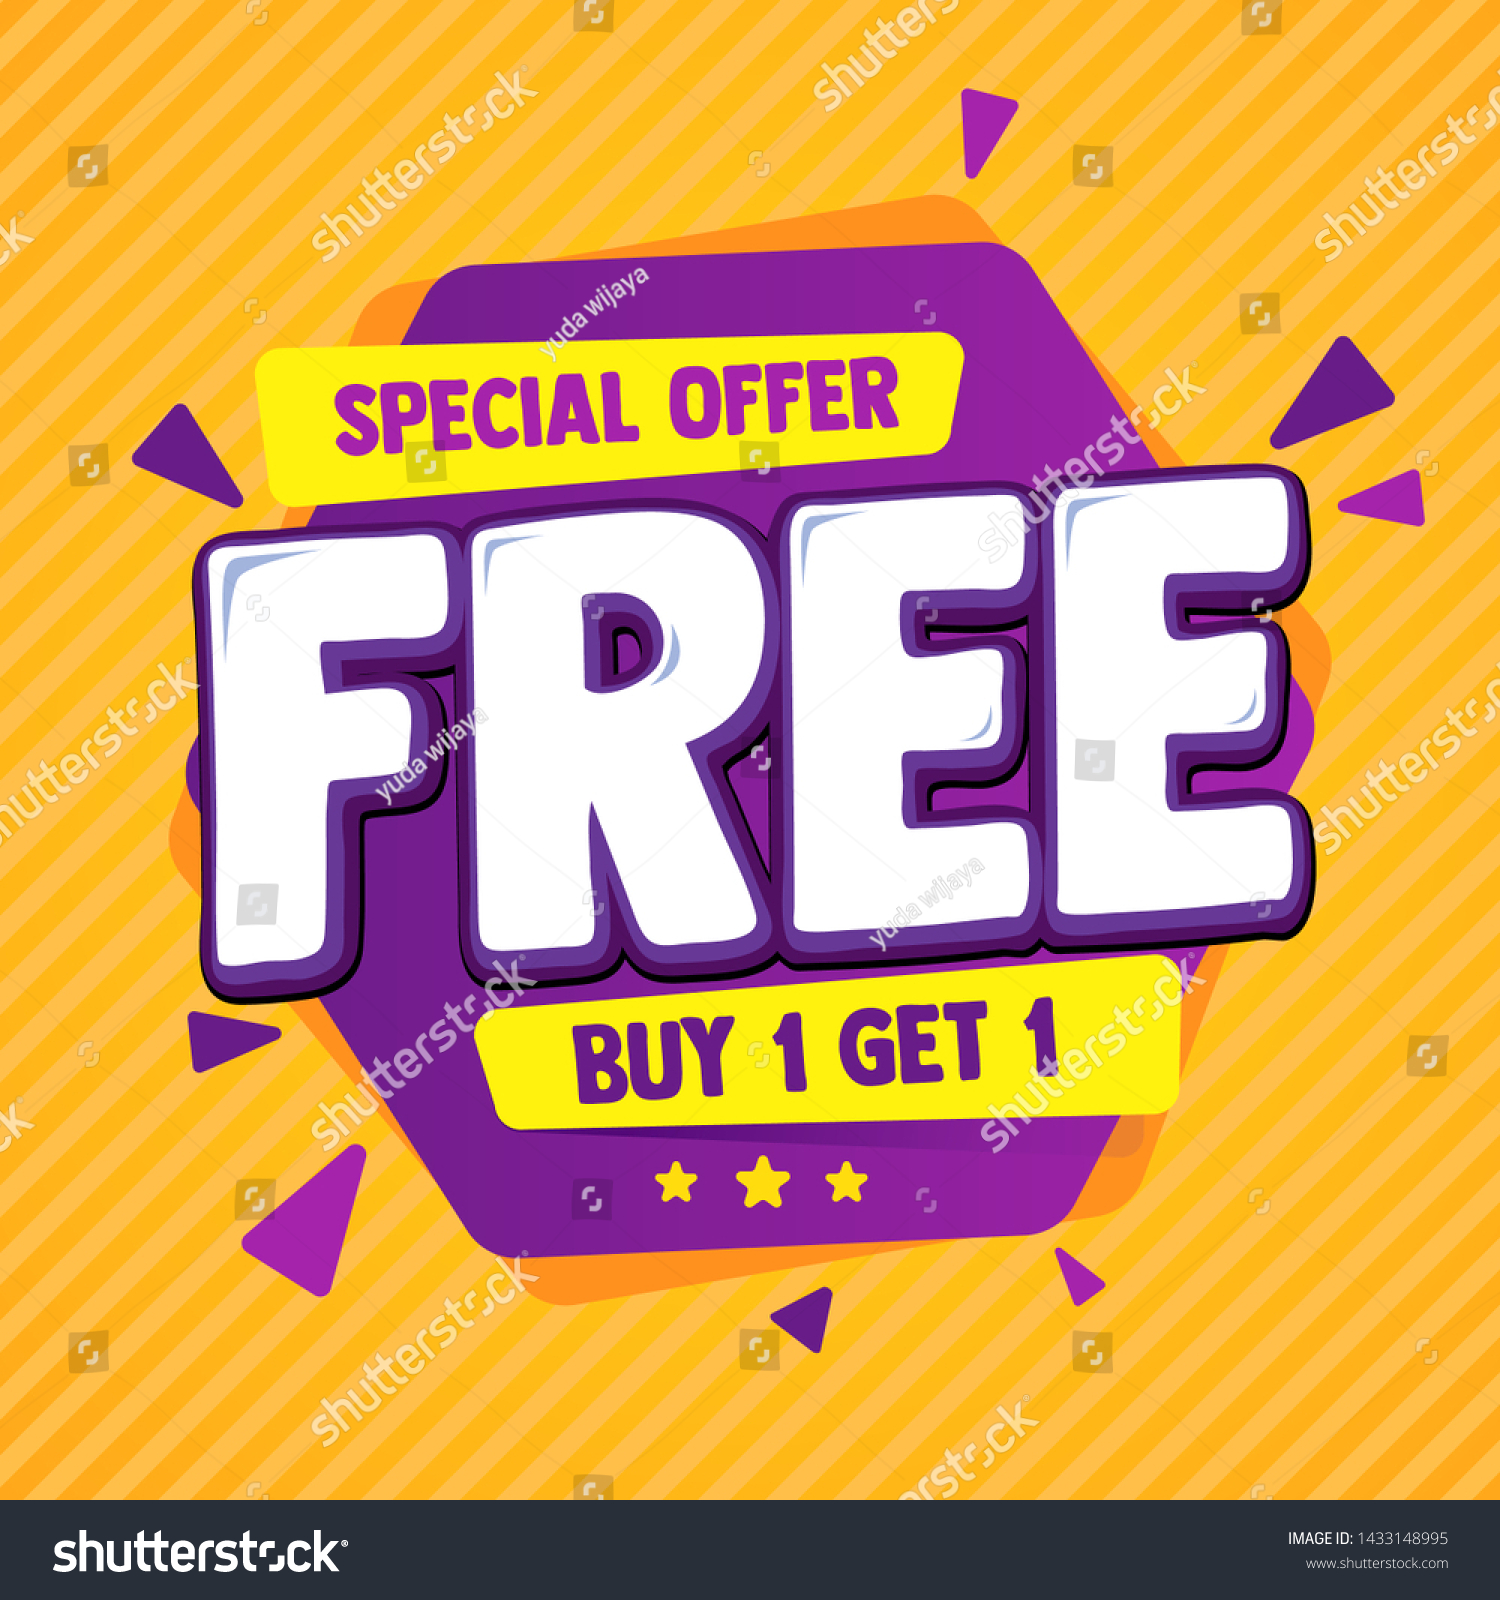 Special offer banner, hot sale, big sale, buy 1 get 1, sale banner vector, purple and orange vector banner